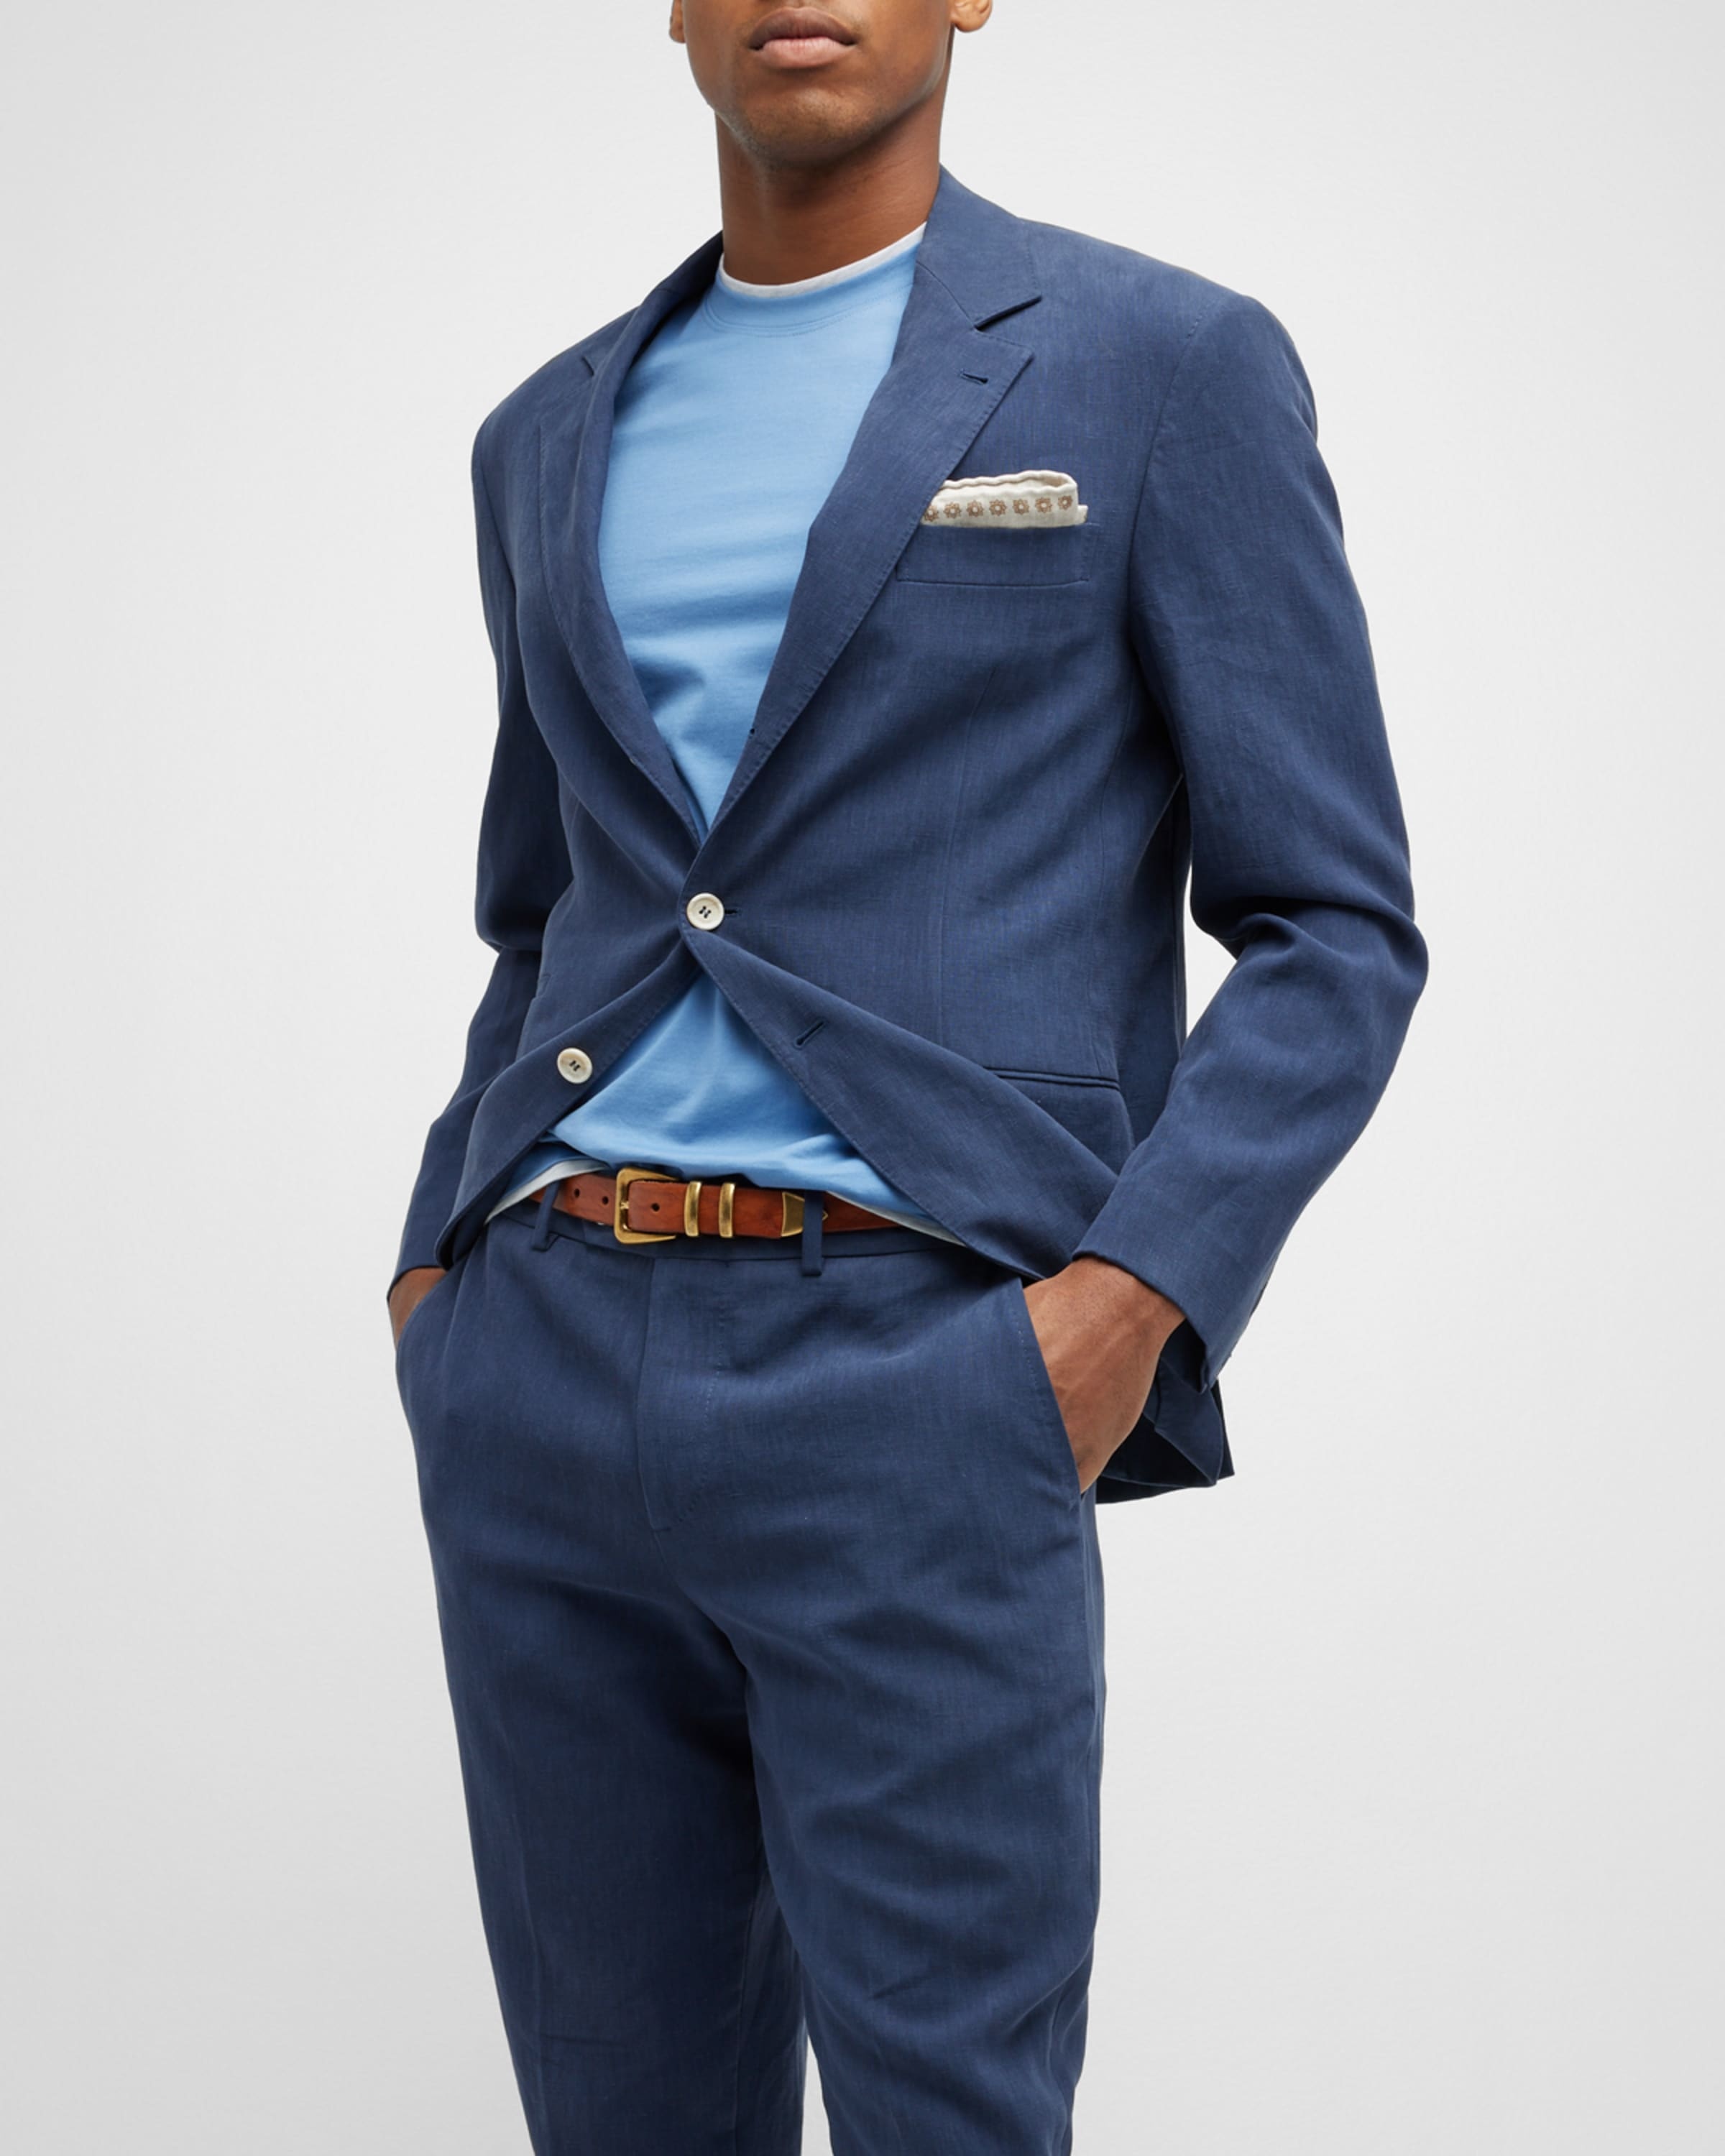 Men's Solid Linen Suit - 1